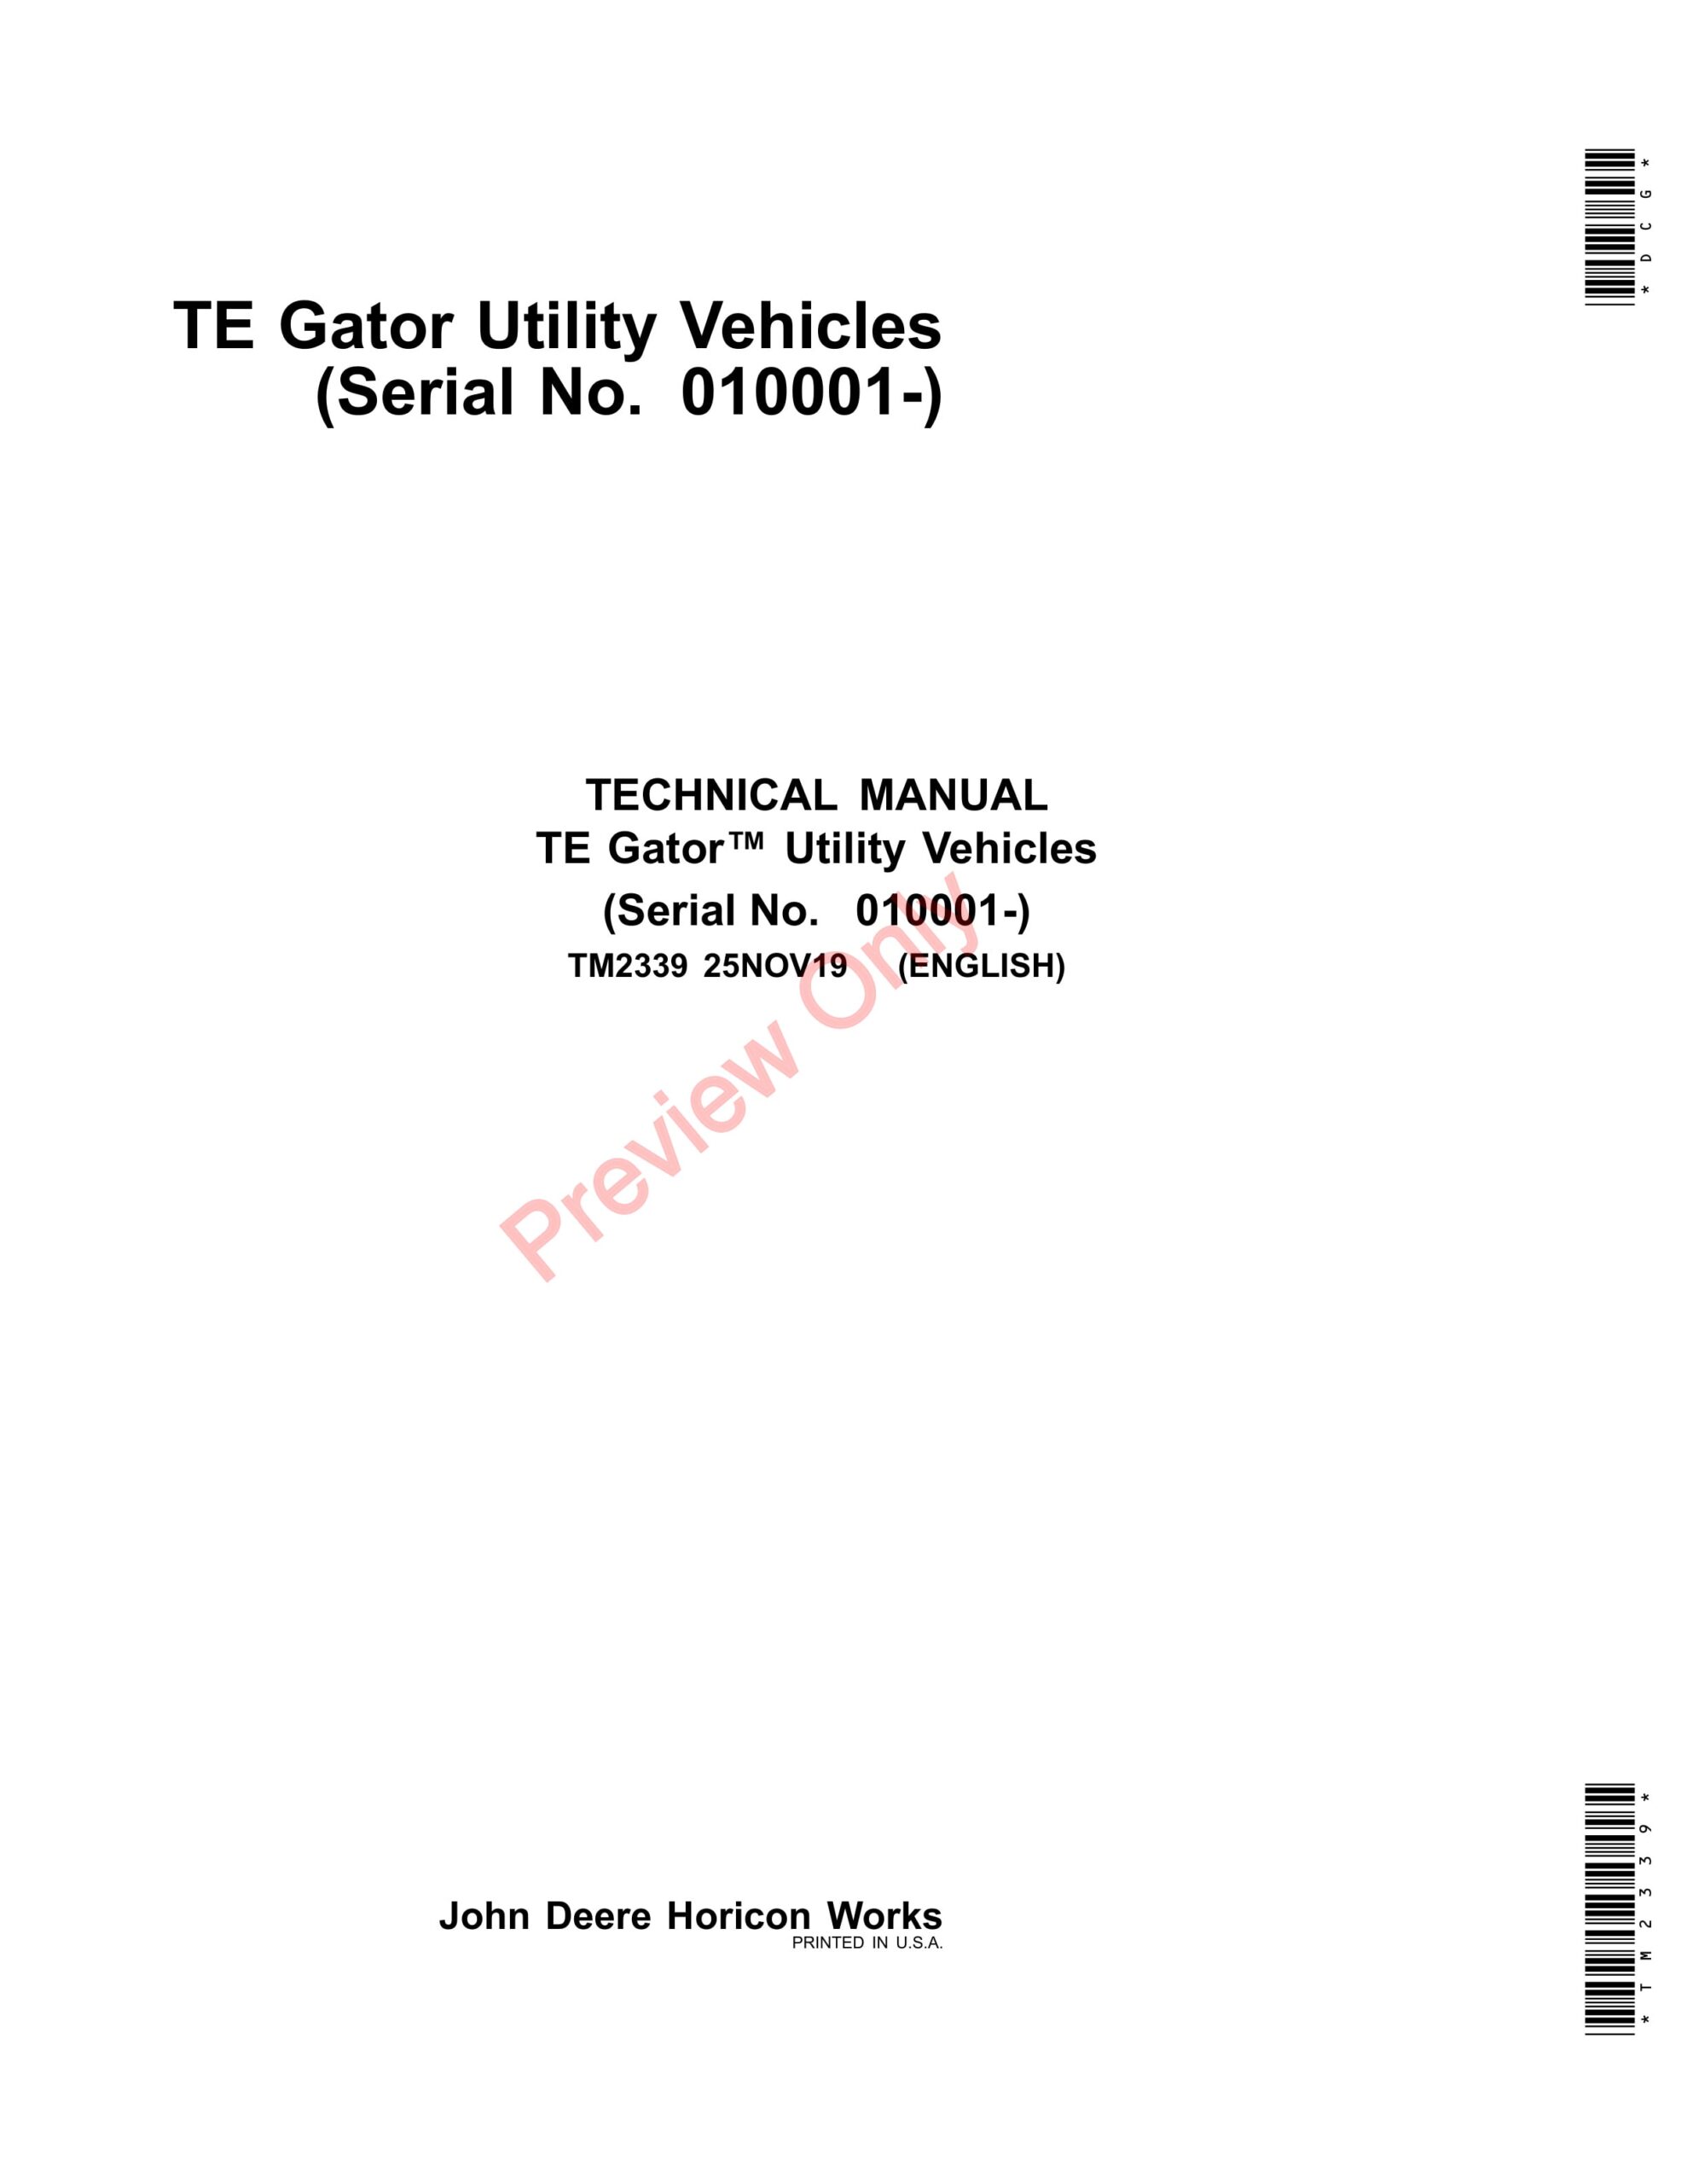 John Deere TE Gator Utility Vehicles Technical Manual TM2339 25NOV19-1